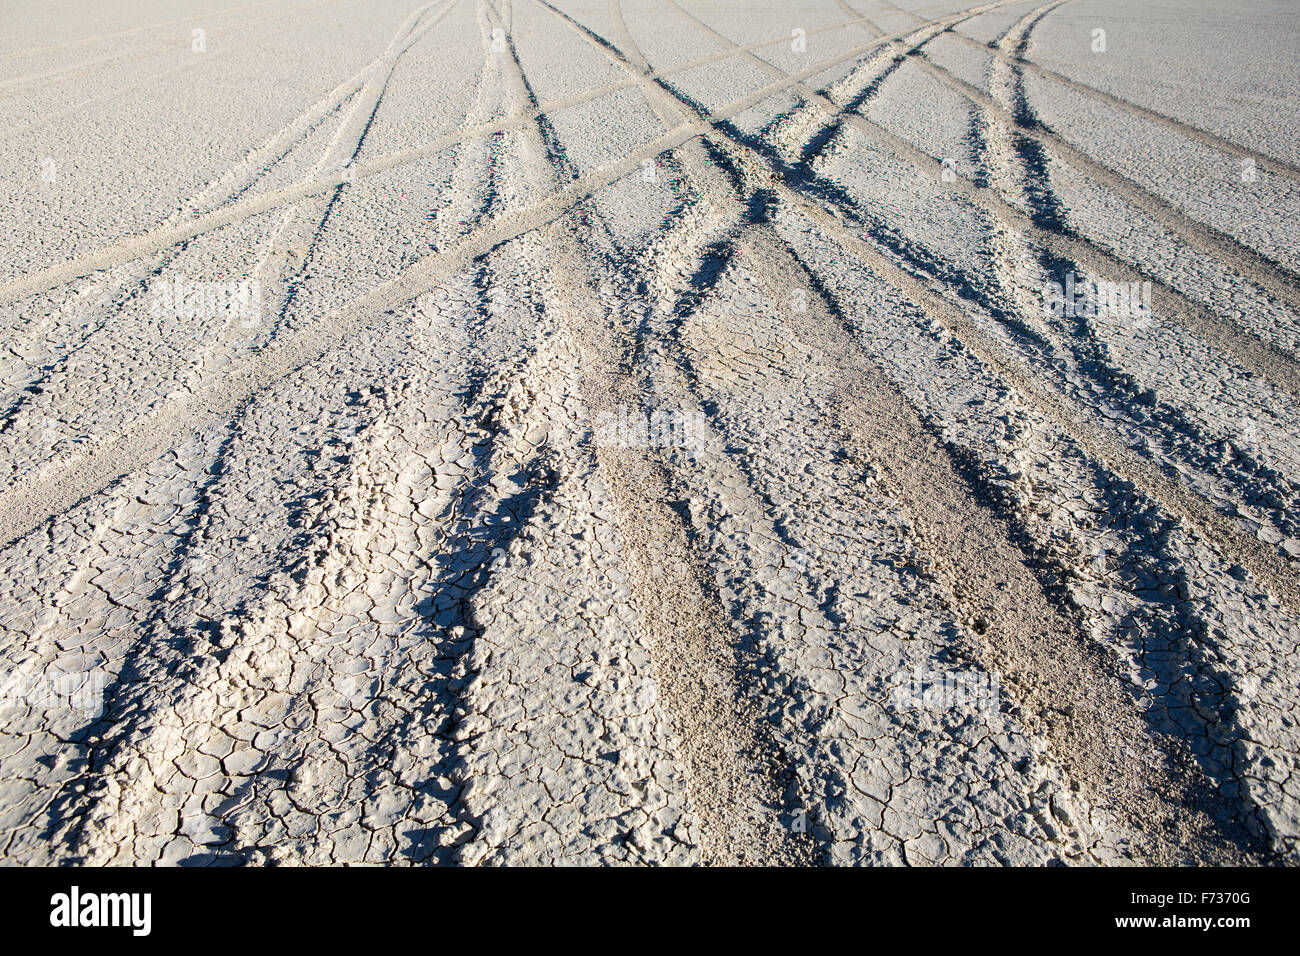 Tire tracks on the playa, salt flats surface. Stock Photo